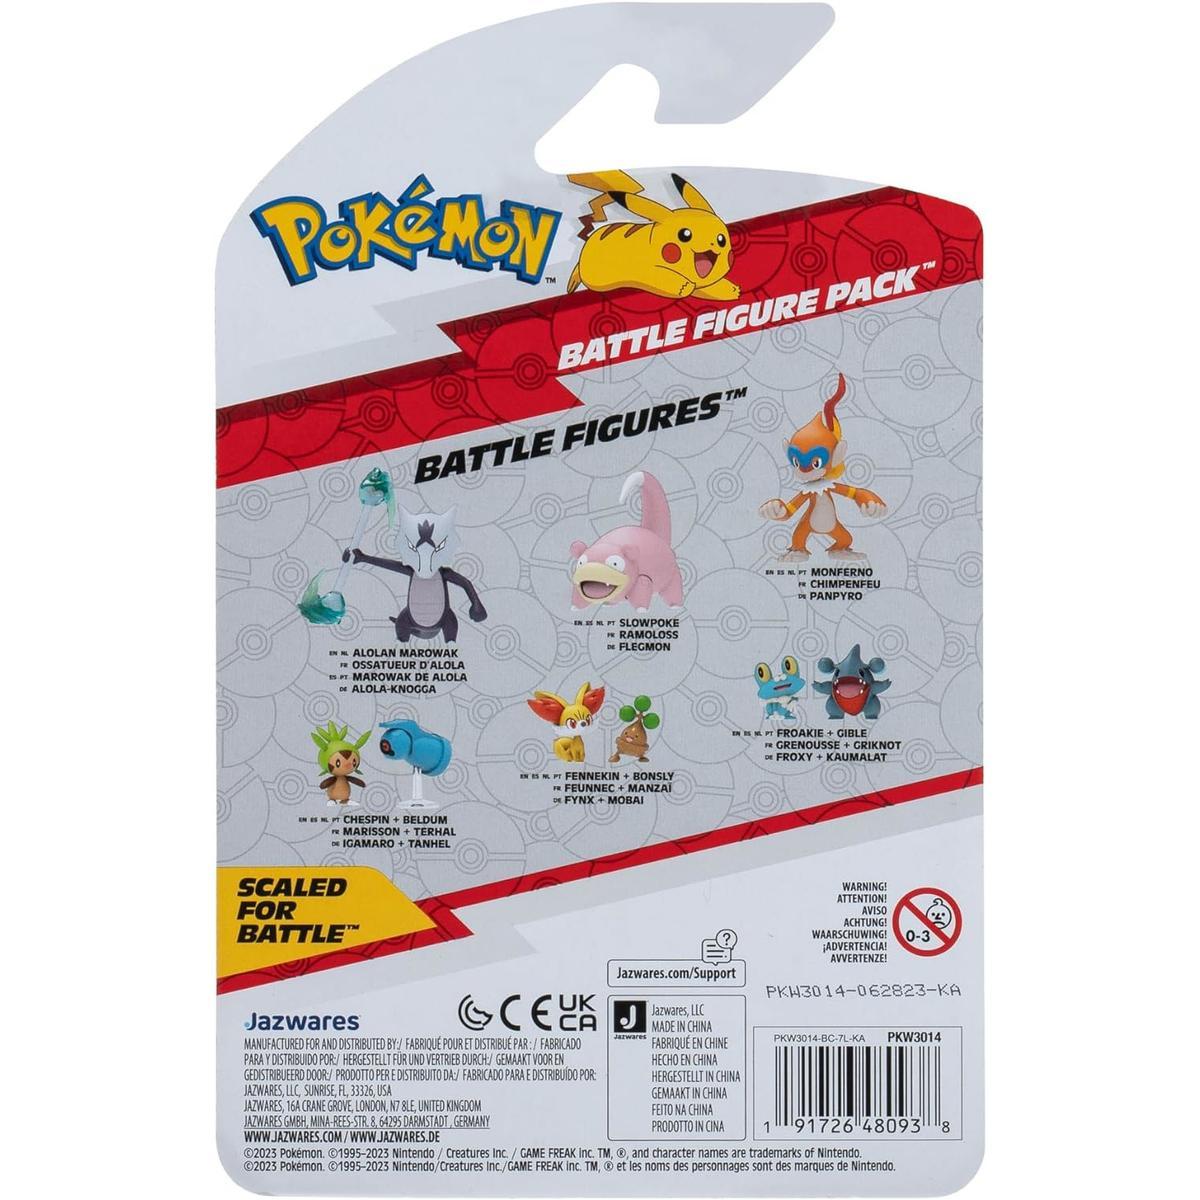 Oryginalne figurki chespin + beldum pokemon battle figure pack 2-pak dla dziecka 2 Full Screen